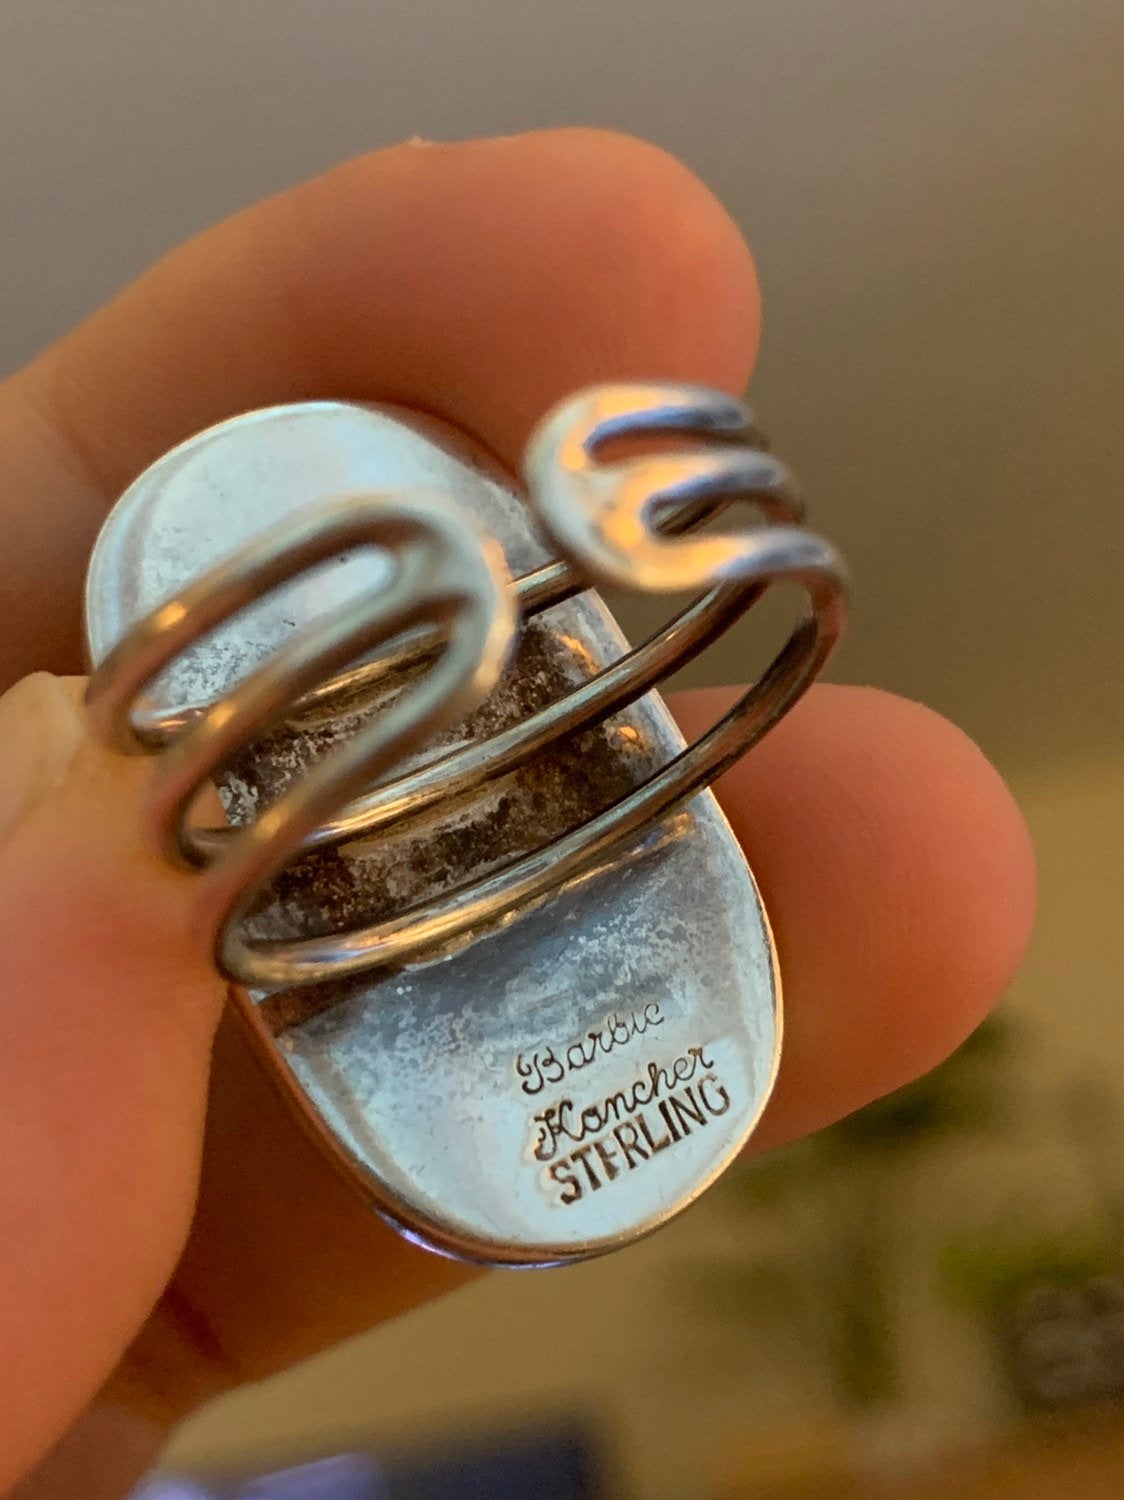 sz 7.75, barbie koncher jewelry, sterling silver handmade ring 925 foiled glass